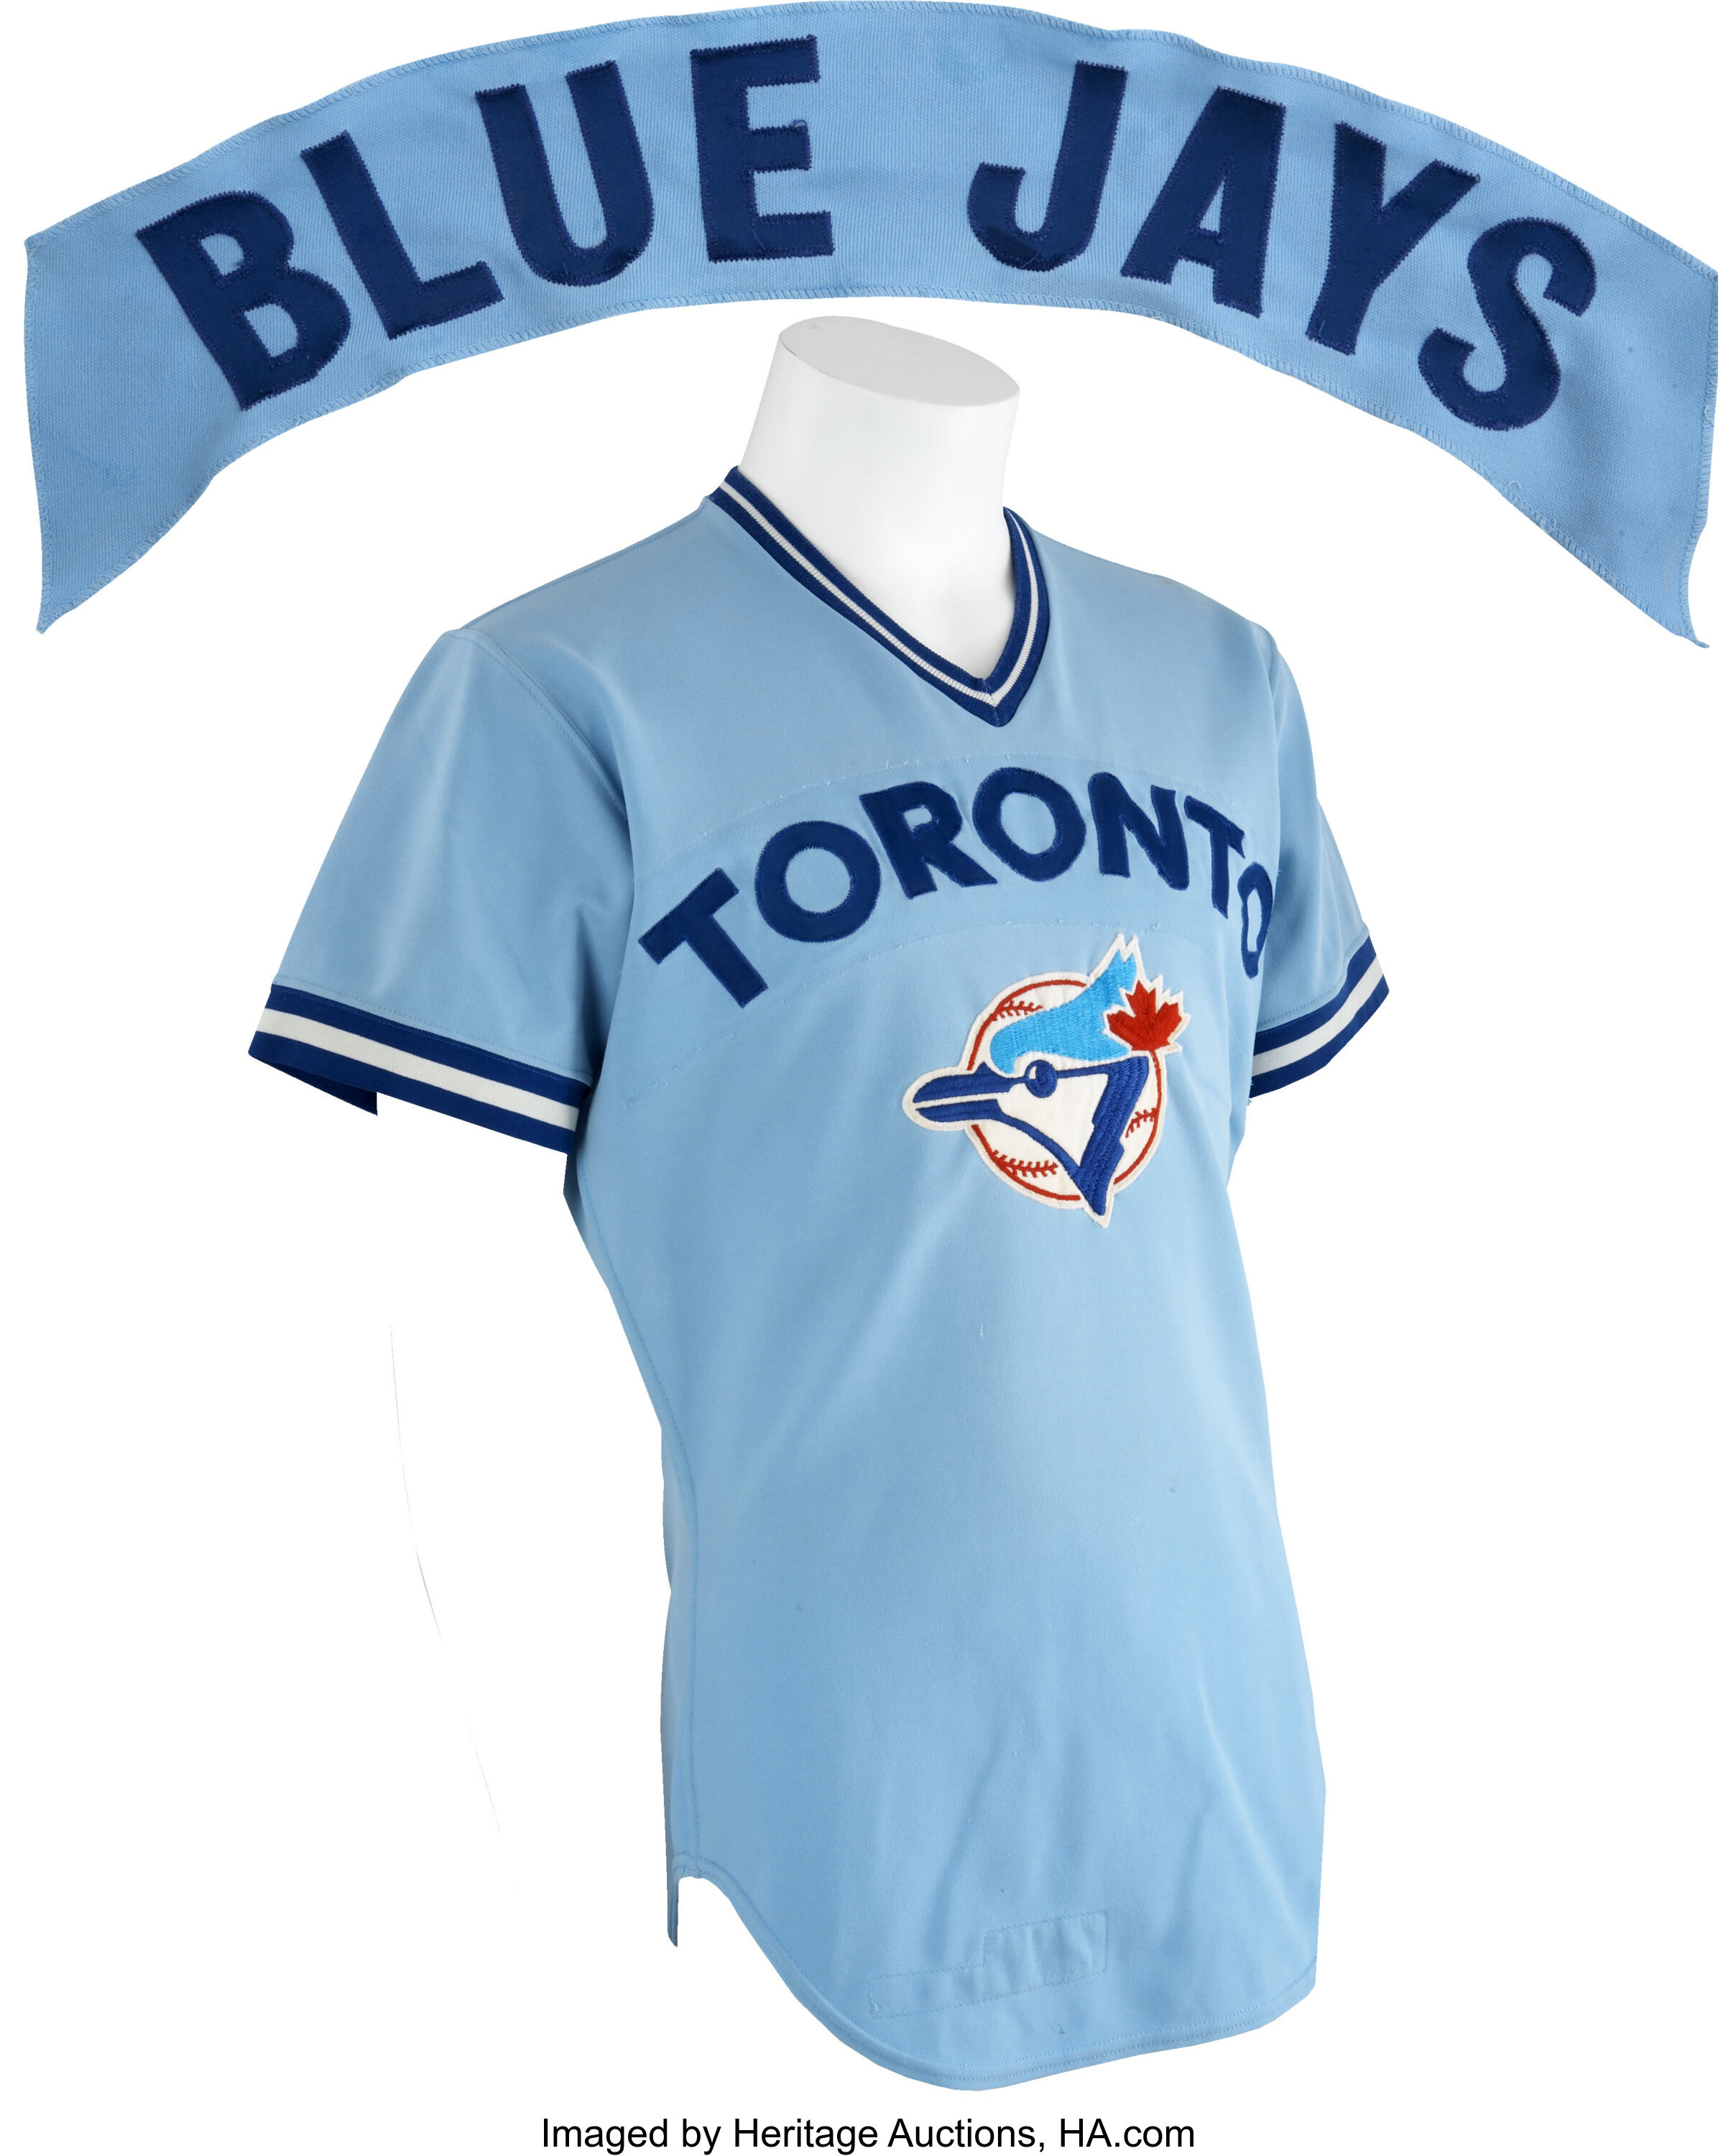 1977 Toronto Blue Jays Inaugural Season Game Worn Jersey.